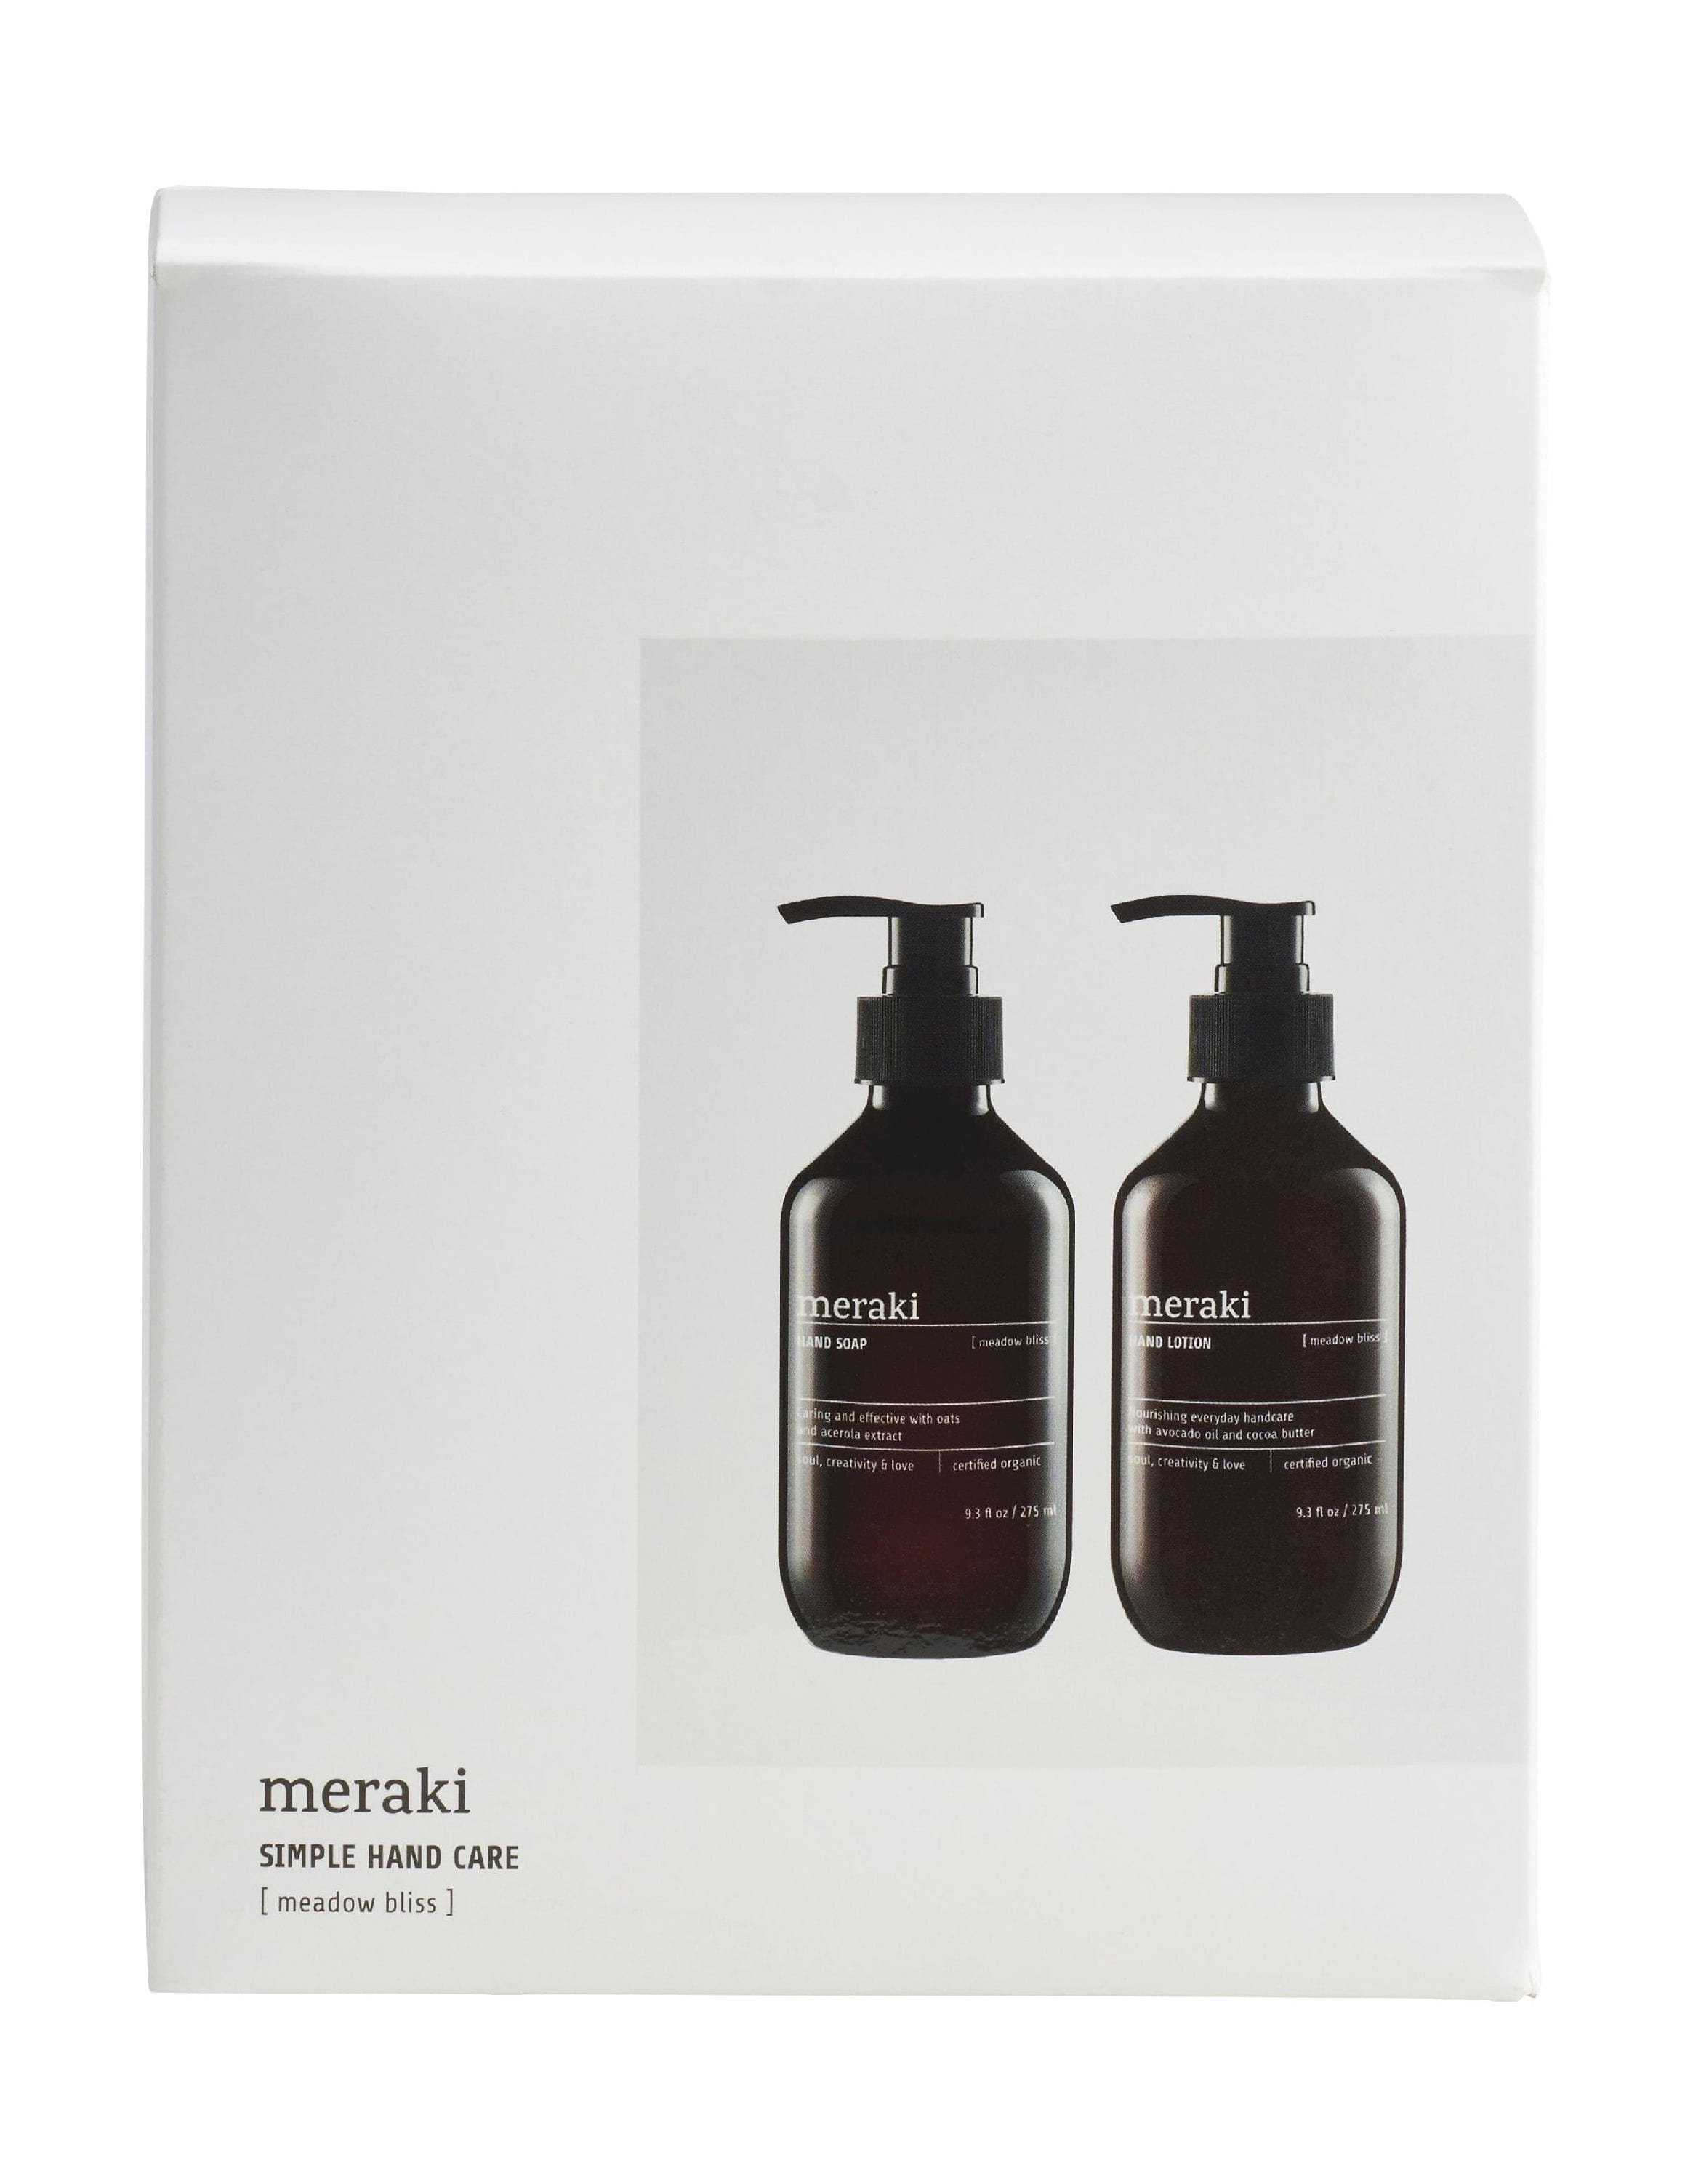 Meraki Simply Hand Care Box 275/275 ml, Bliss Meadow Bliss